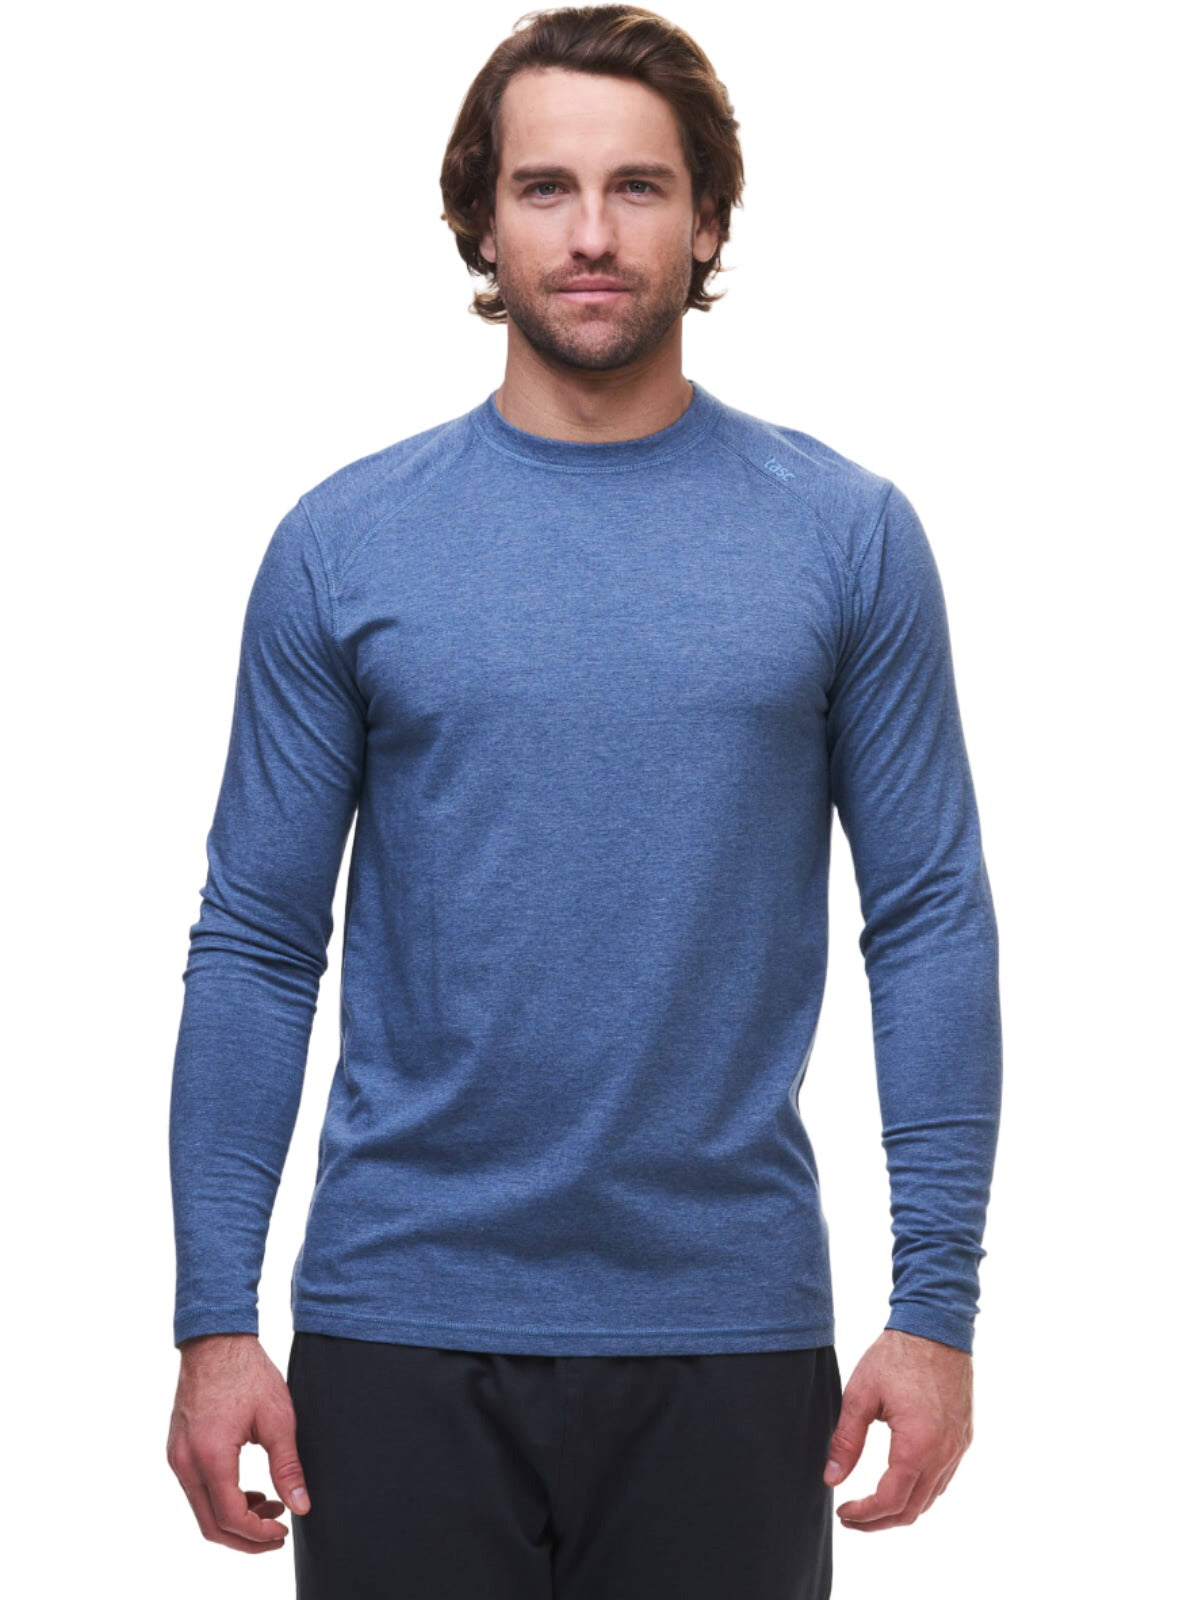 Tasc Men's Carrollton Long Sleeve Fitness T-Shirt Apparel Tasc Indigo Heather-406 Small 